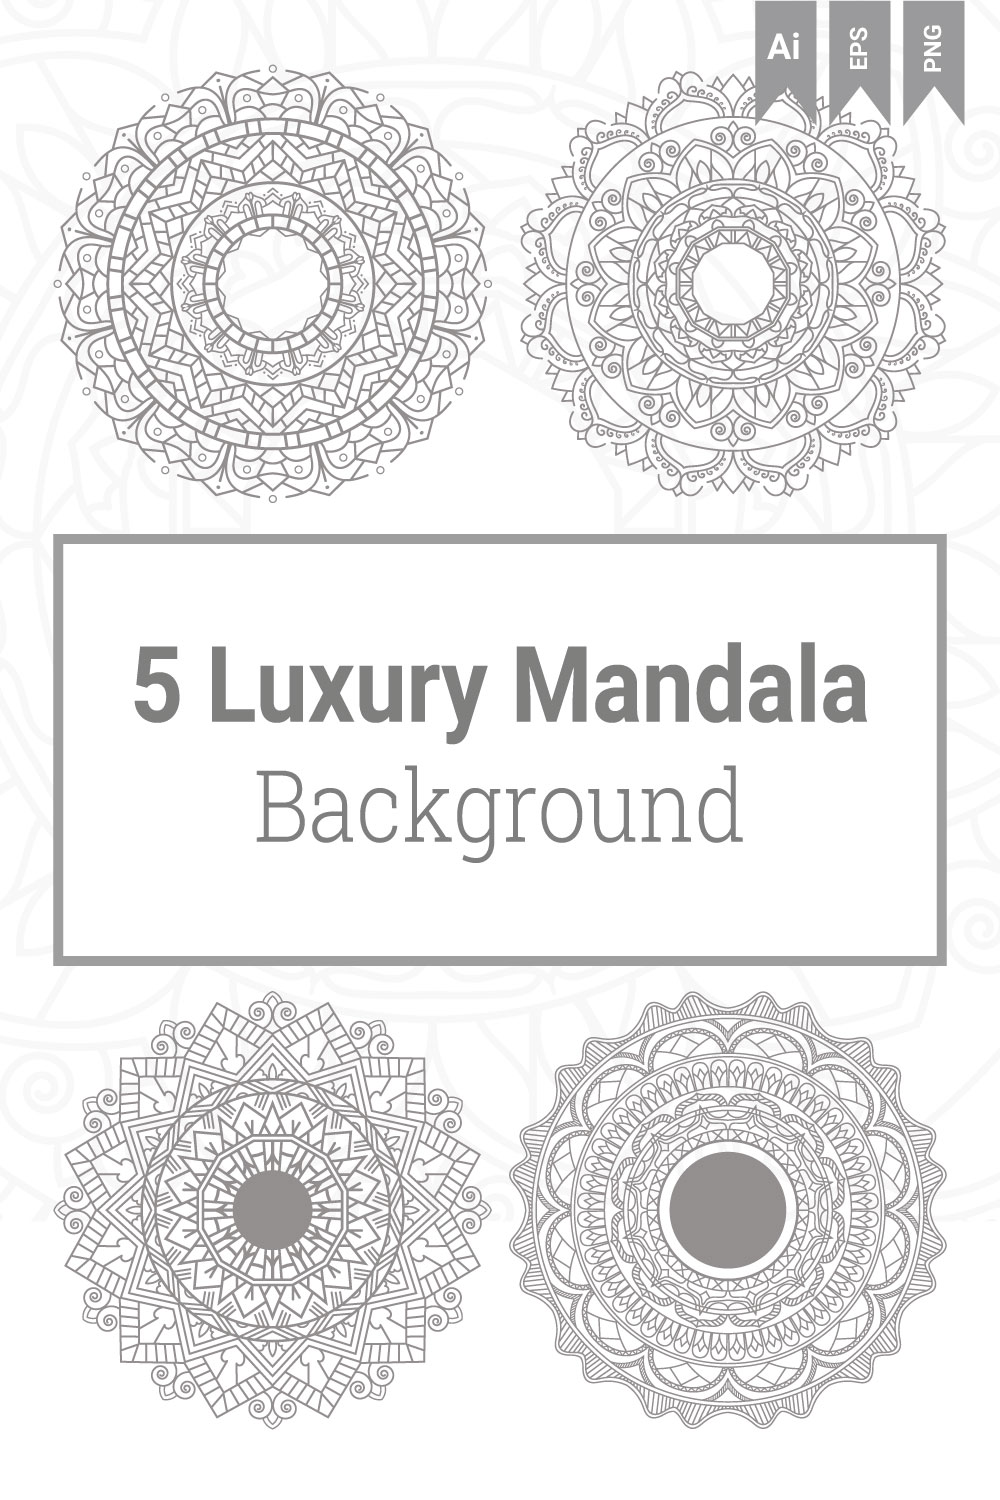 Abstract Luxury Floral and Mandala Elegant Background pinterest image.